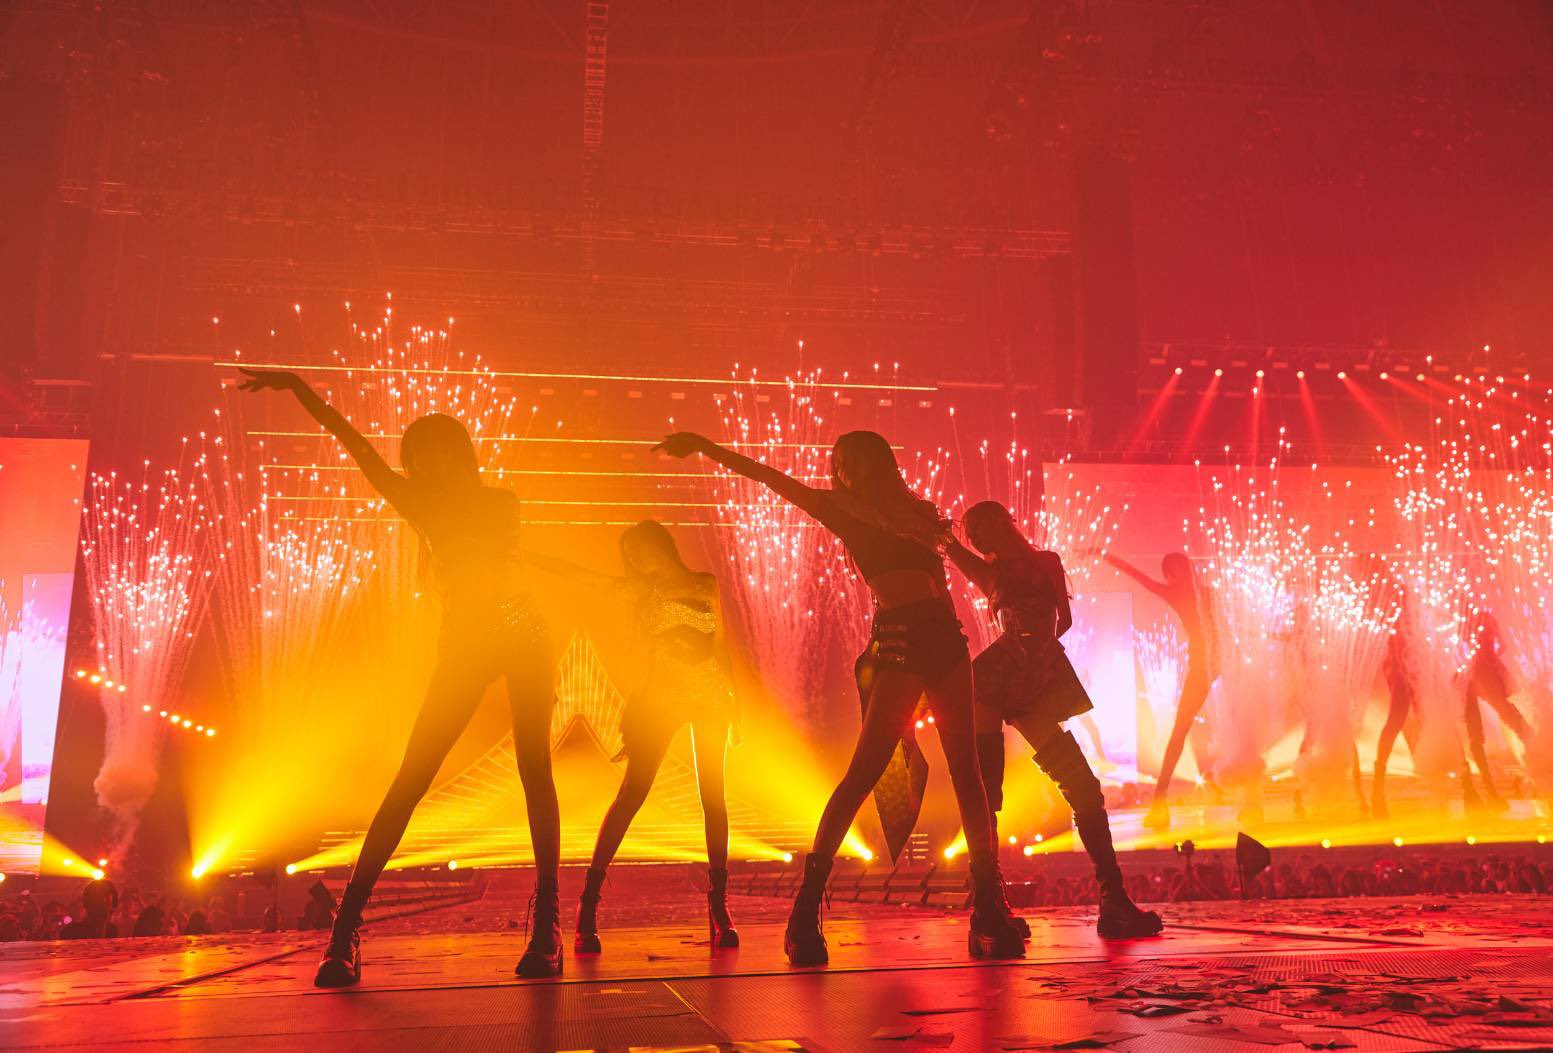 BLACKPINK BORN PINK World Tour Finale in SEOUL